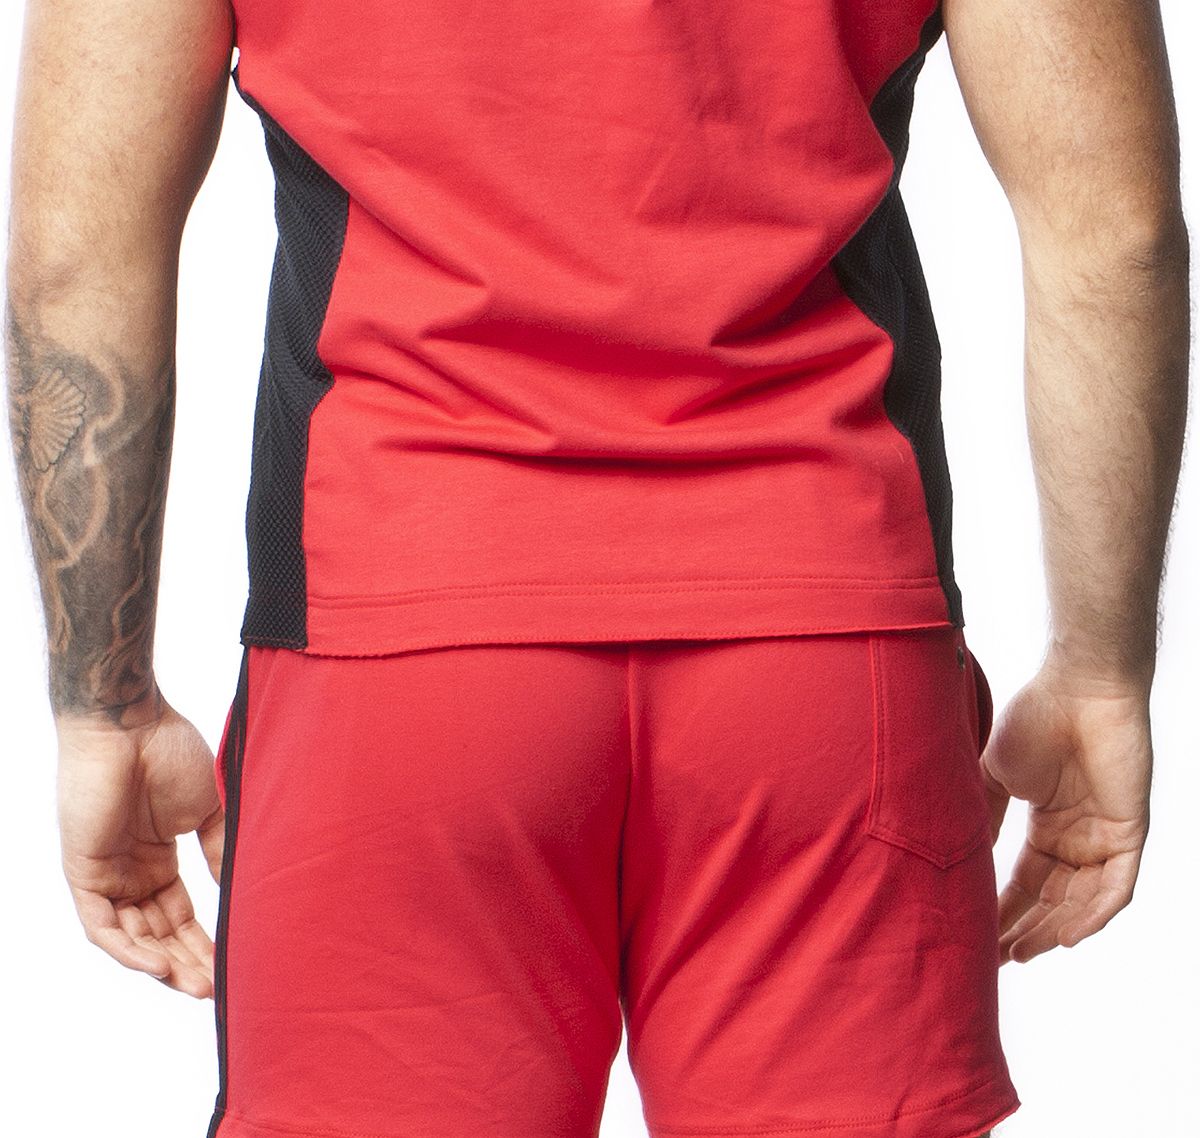 Alexander COBB Pantaloni sportivi LONG STRIPE RED, rosso